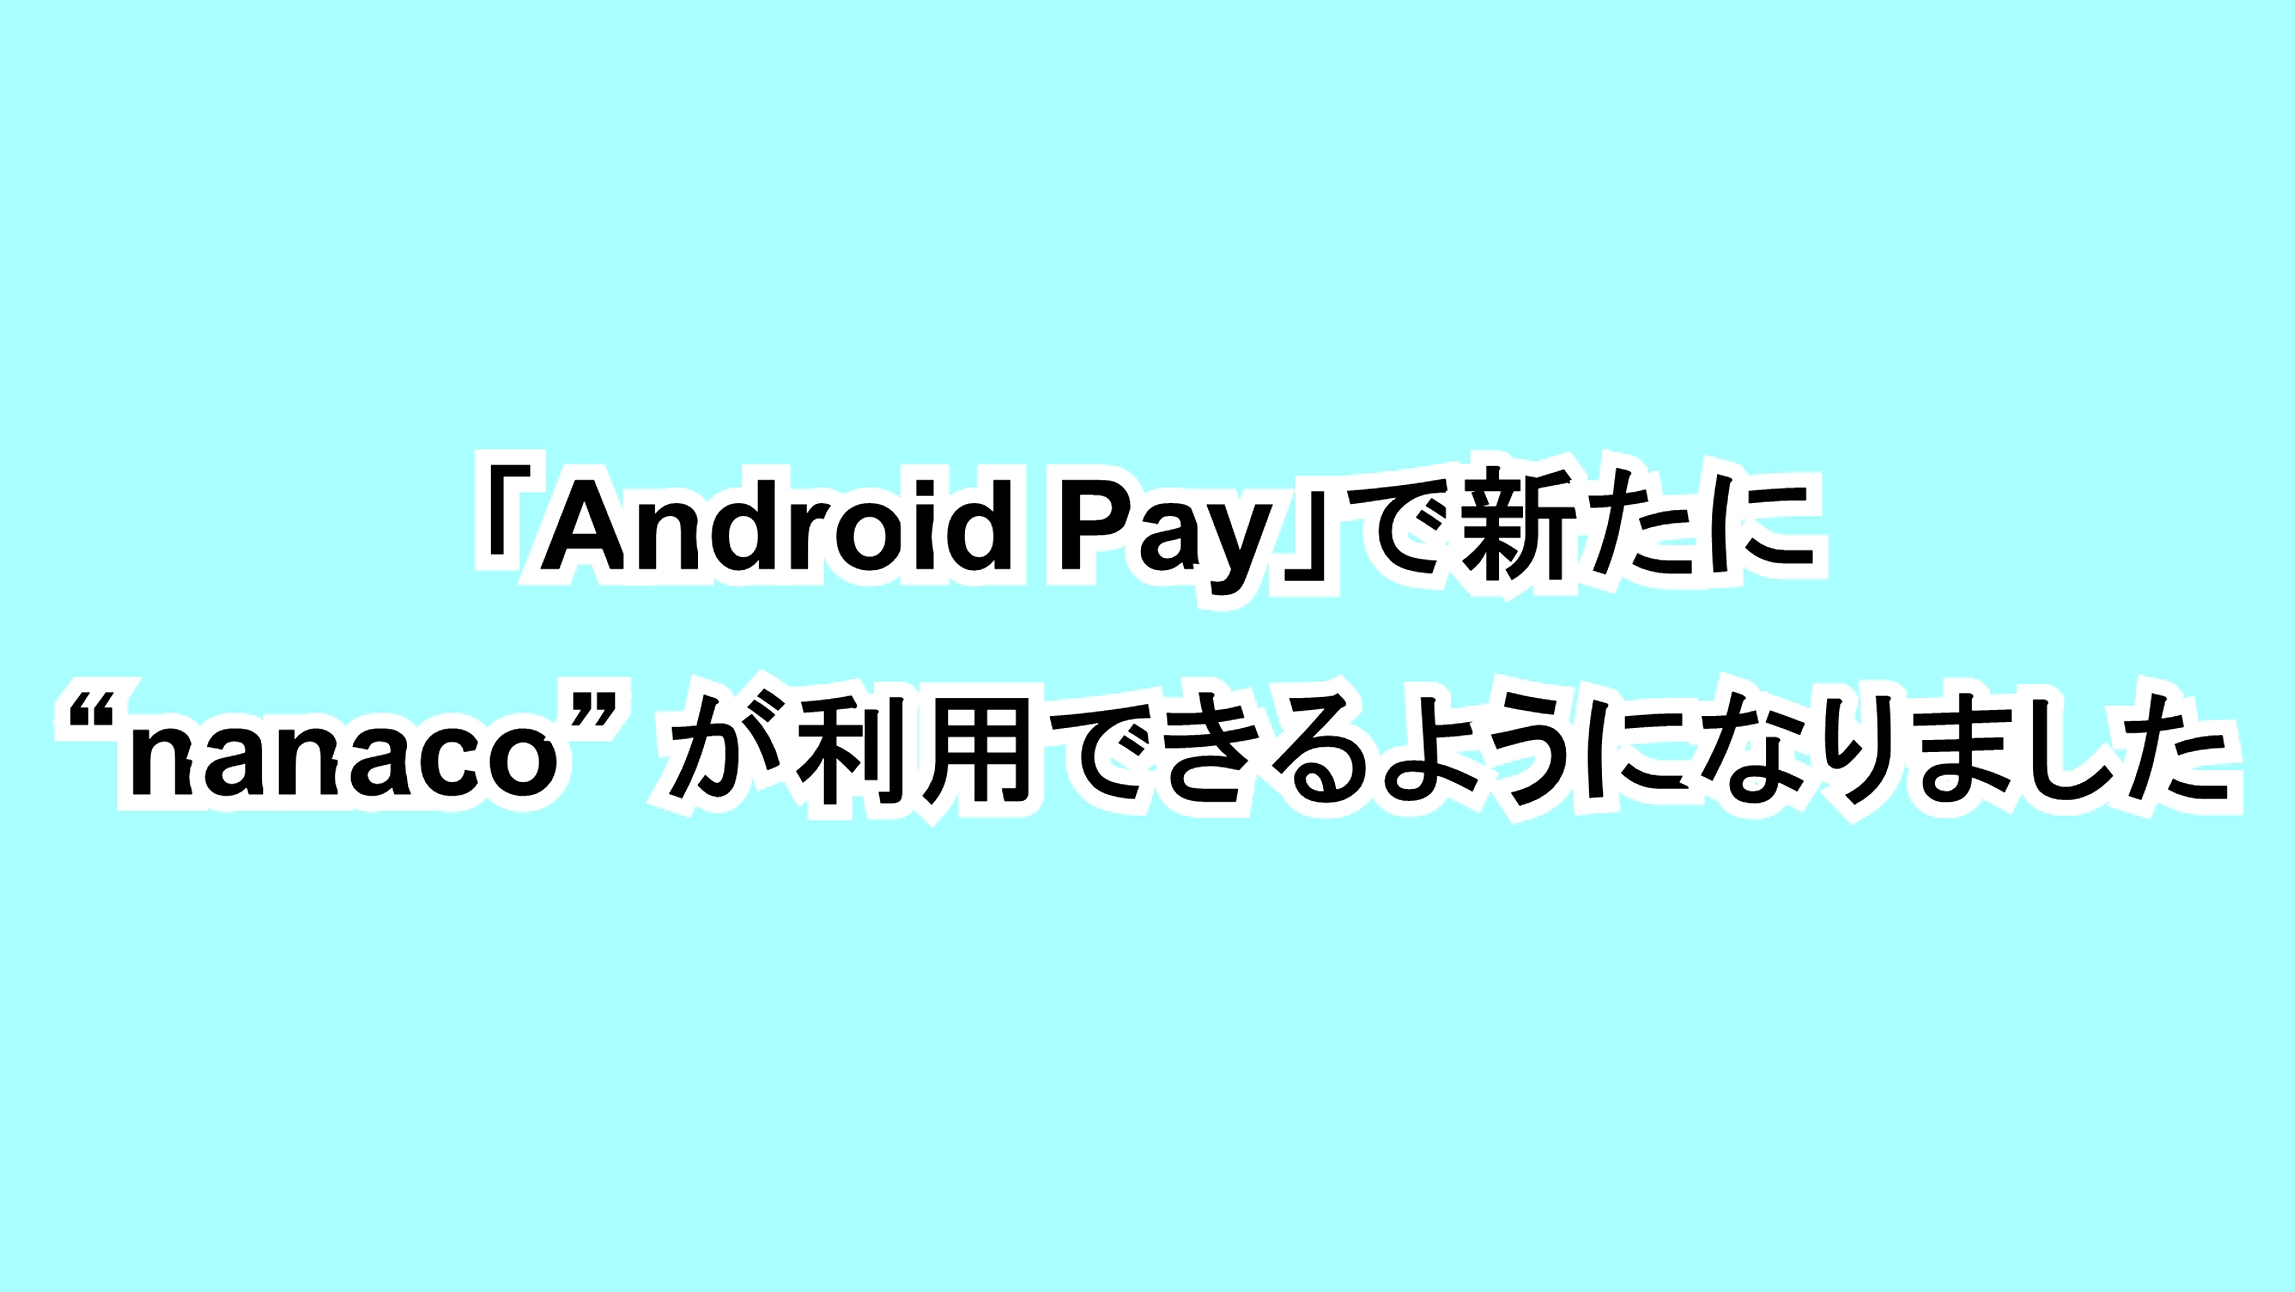 「Android Pay」で新たに“nanaco”が利用できるようになりました